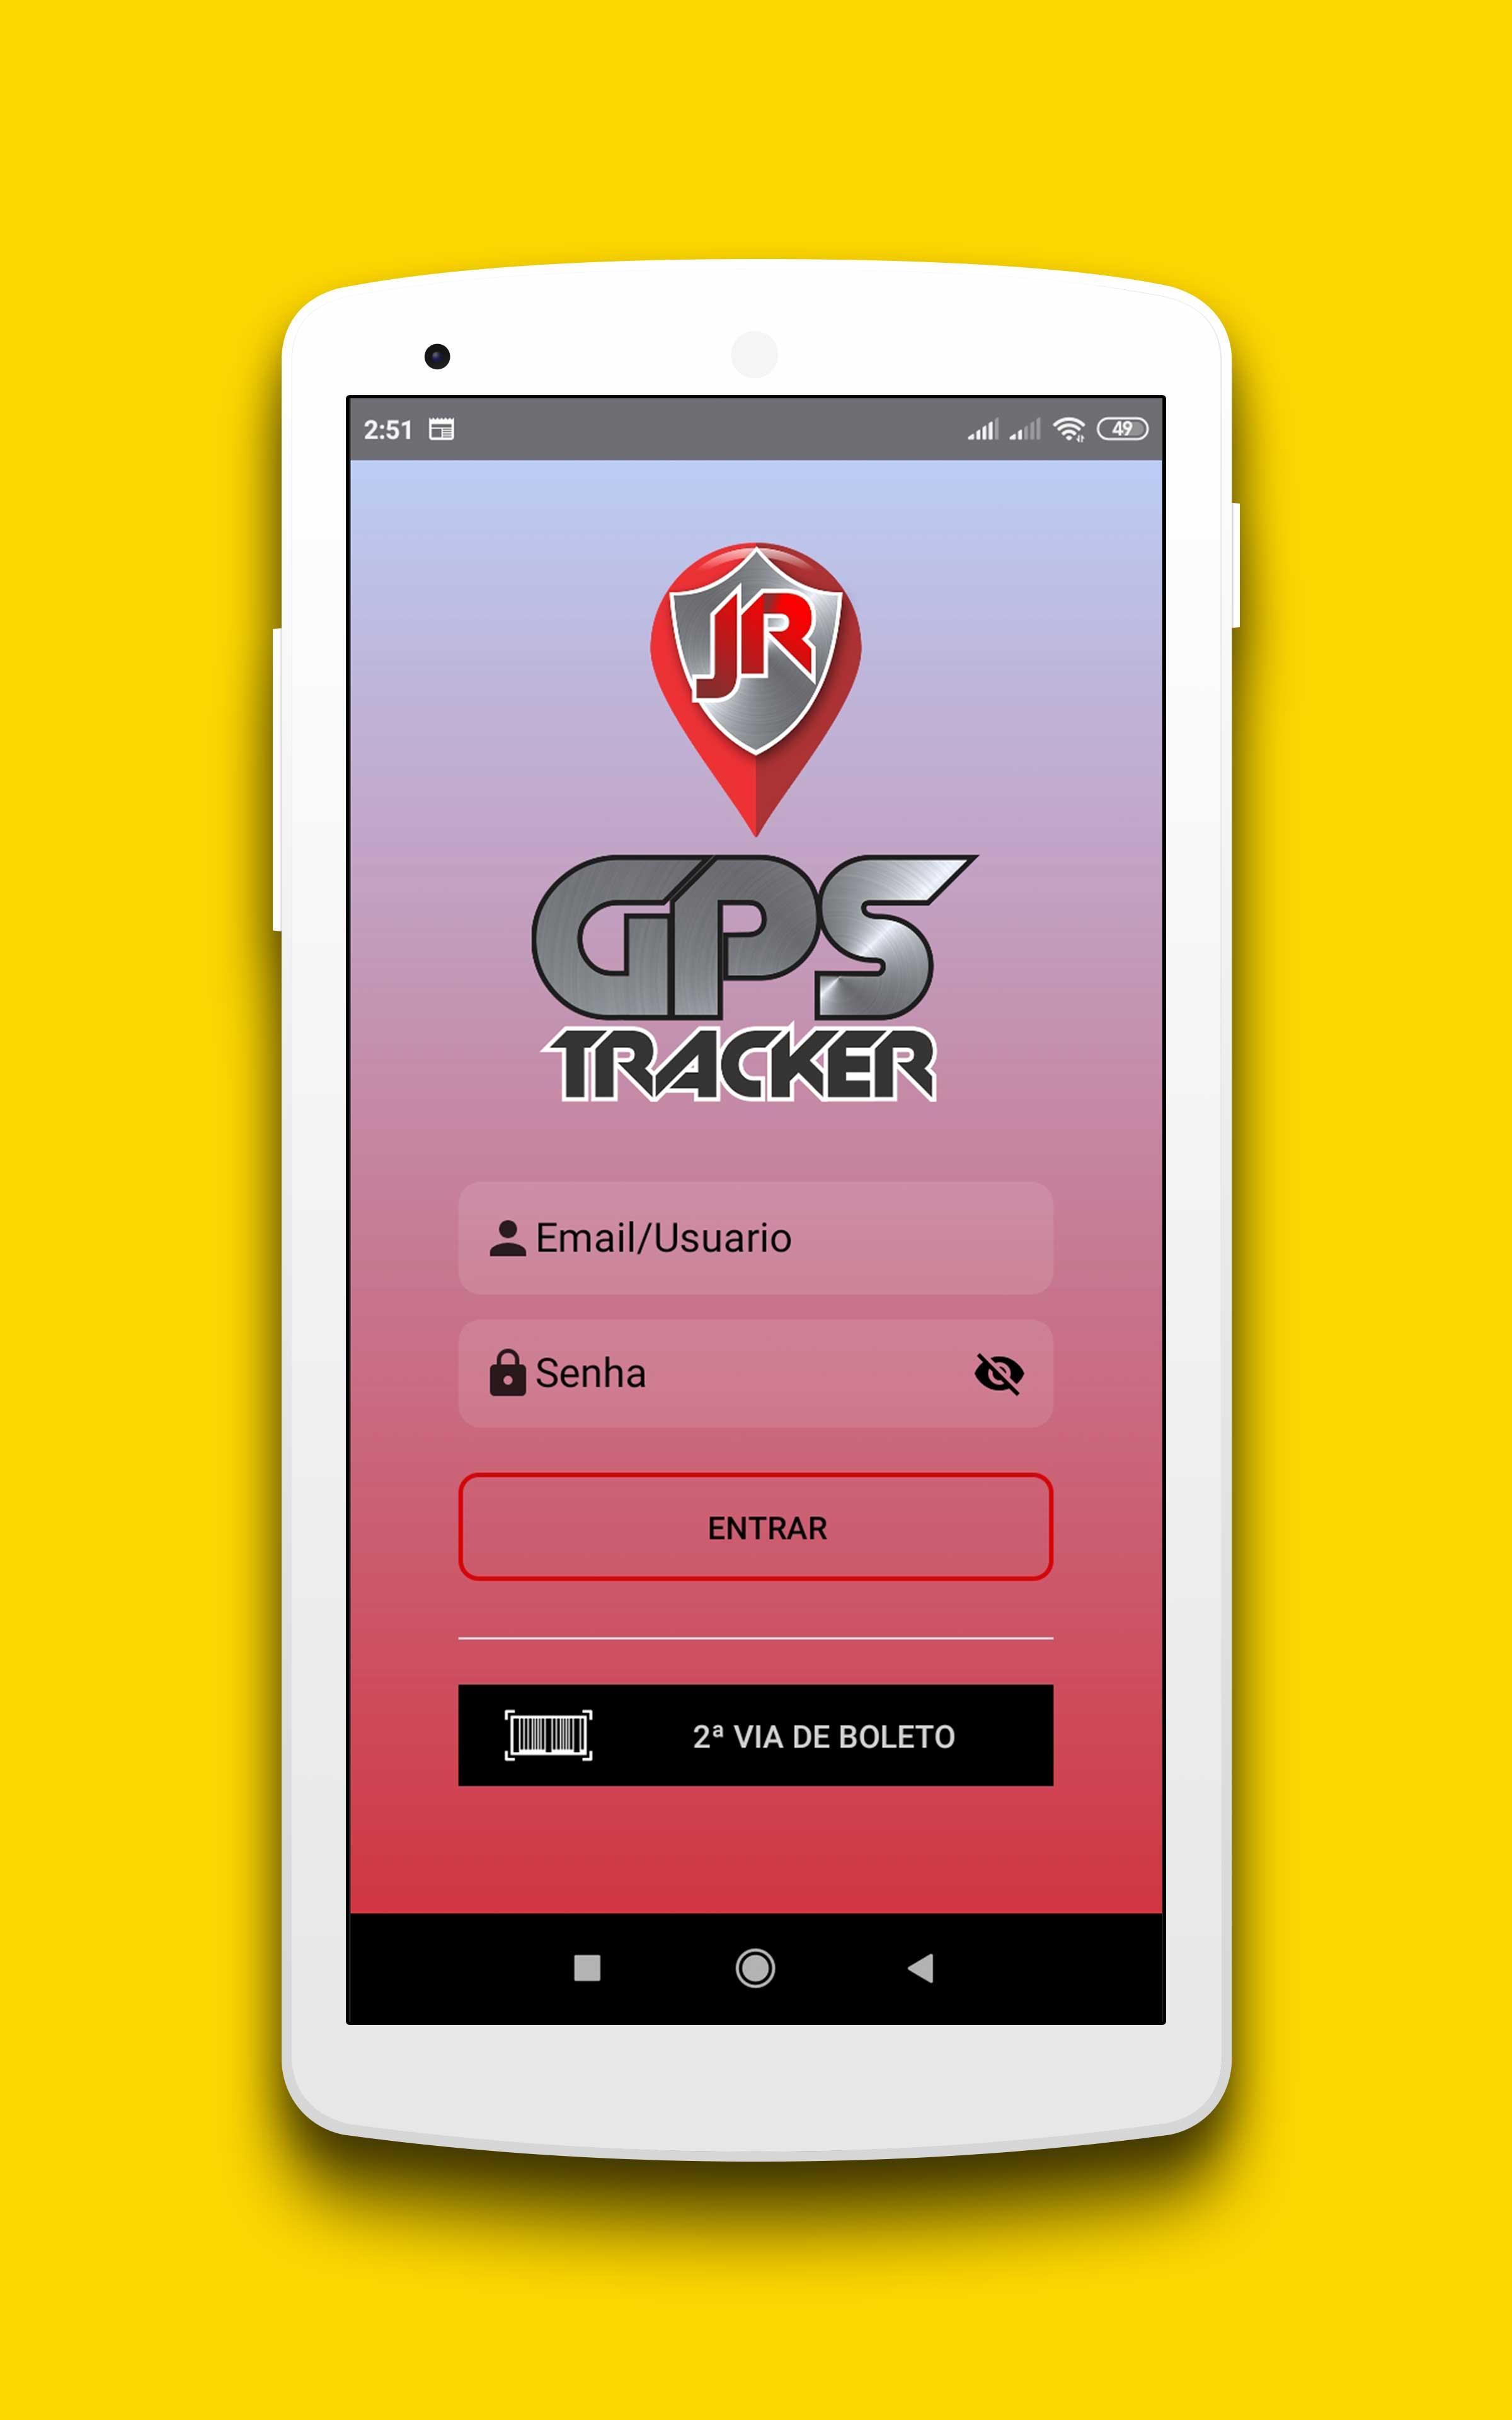 JR GPS TRACKER 4.1 Screenshot 1